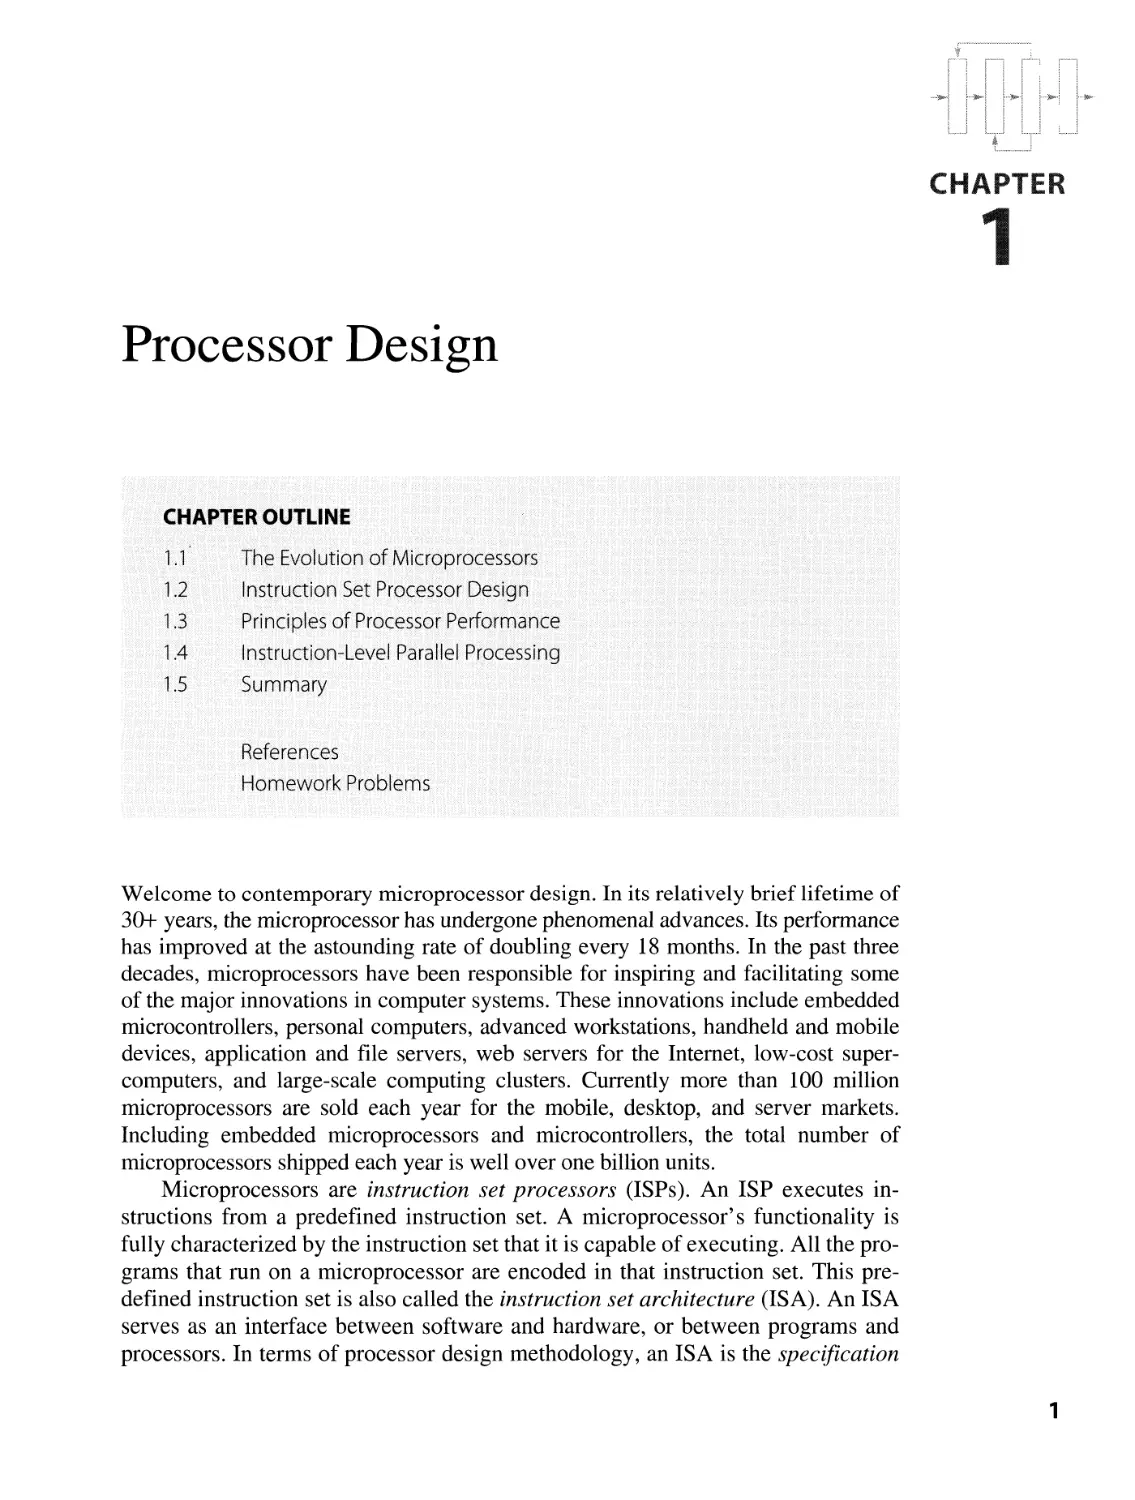 1. Processor Design